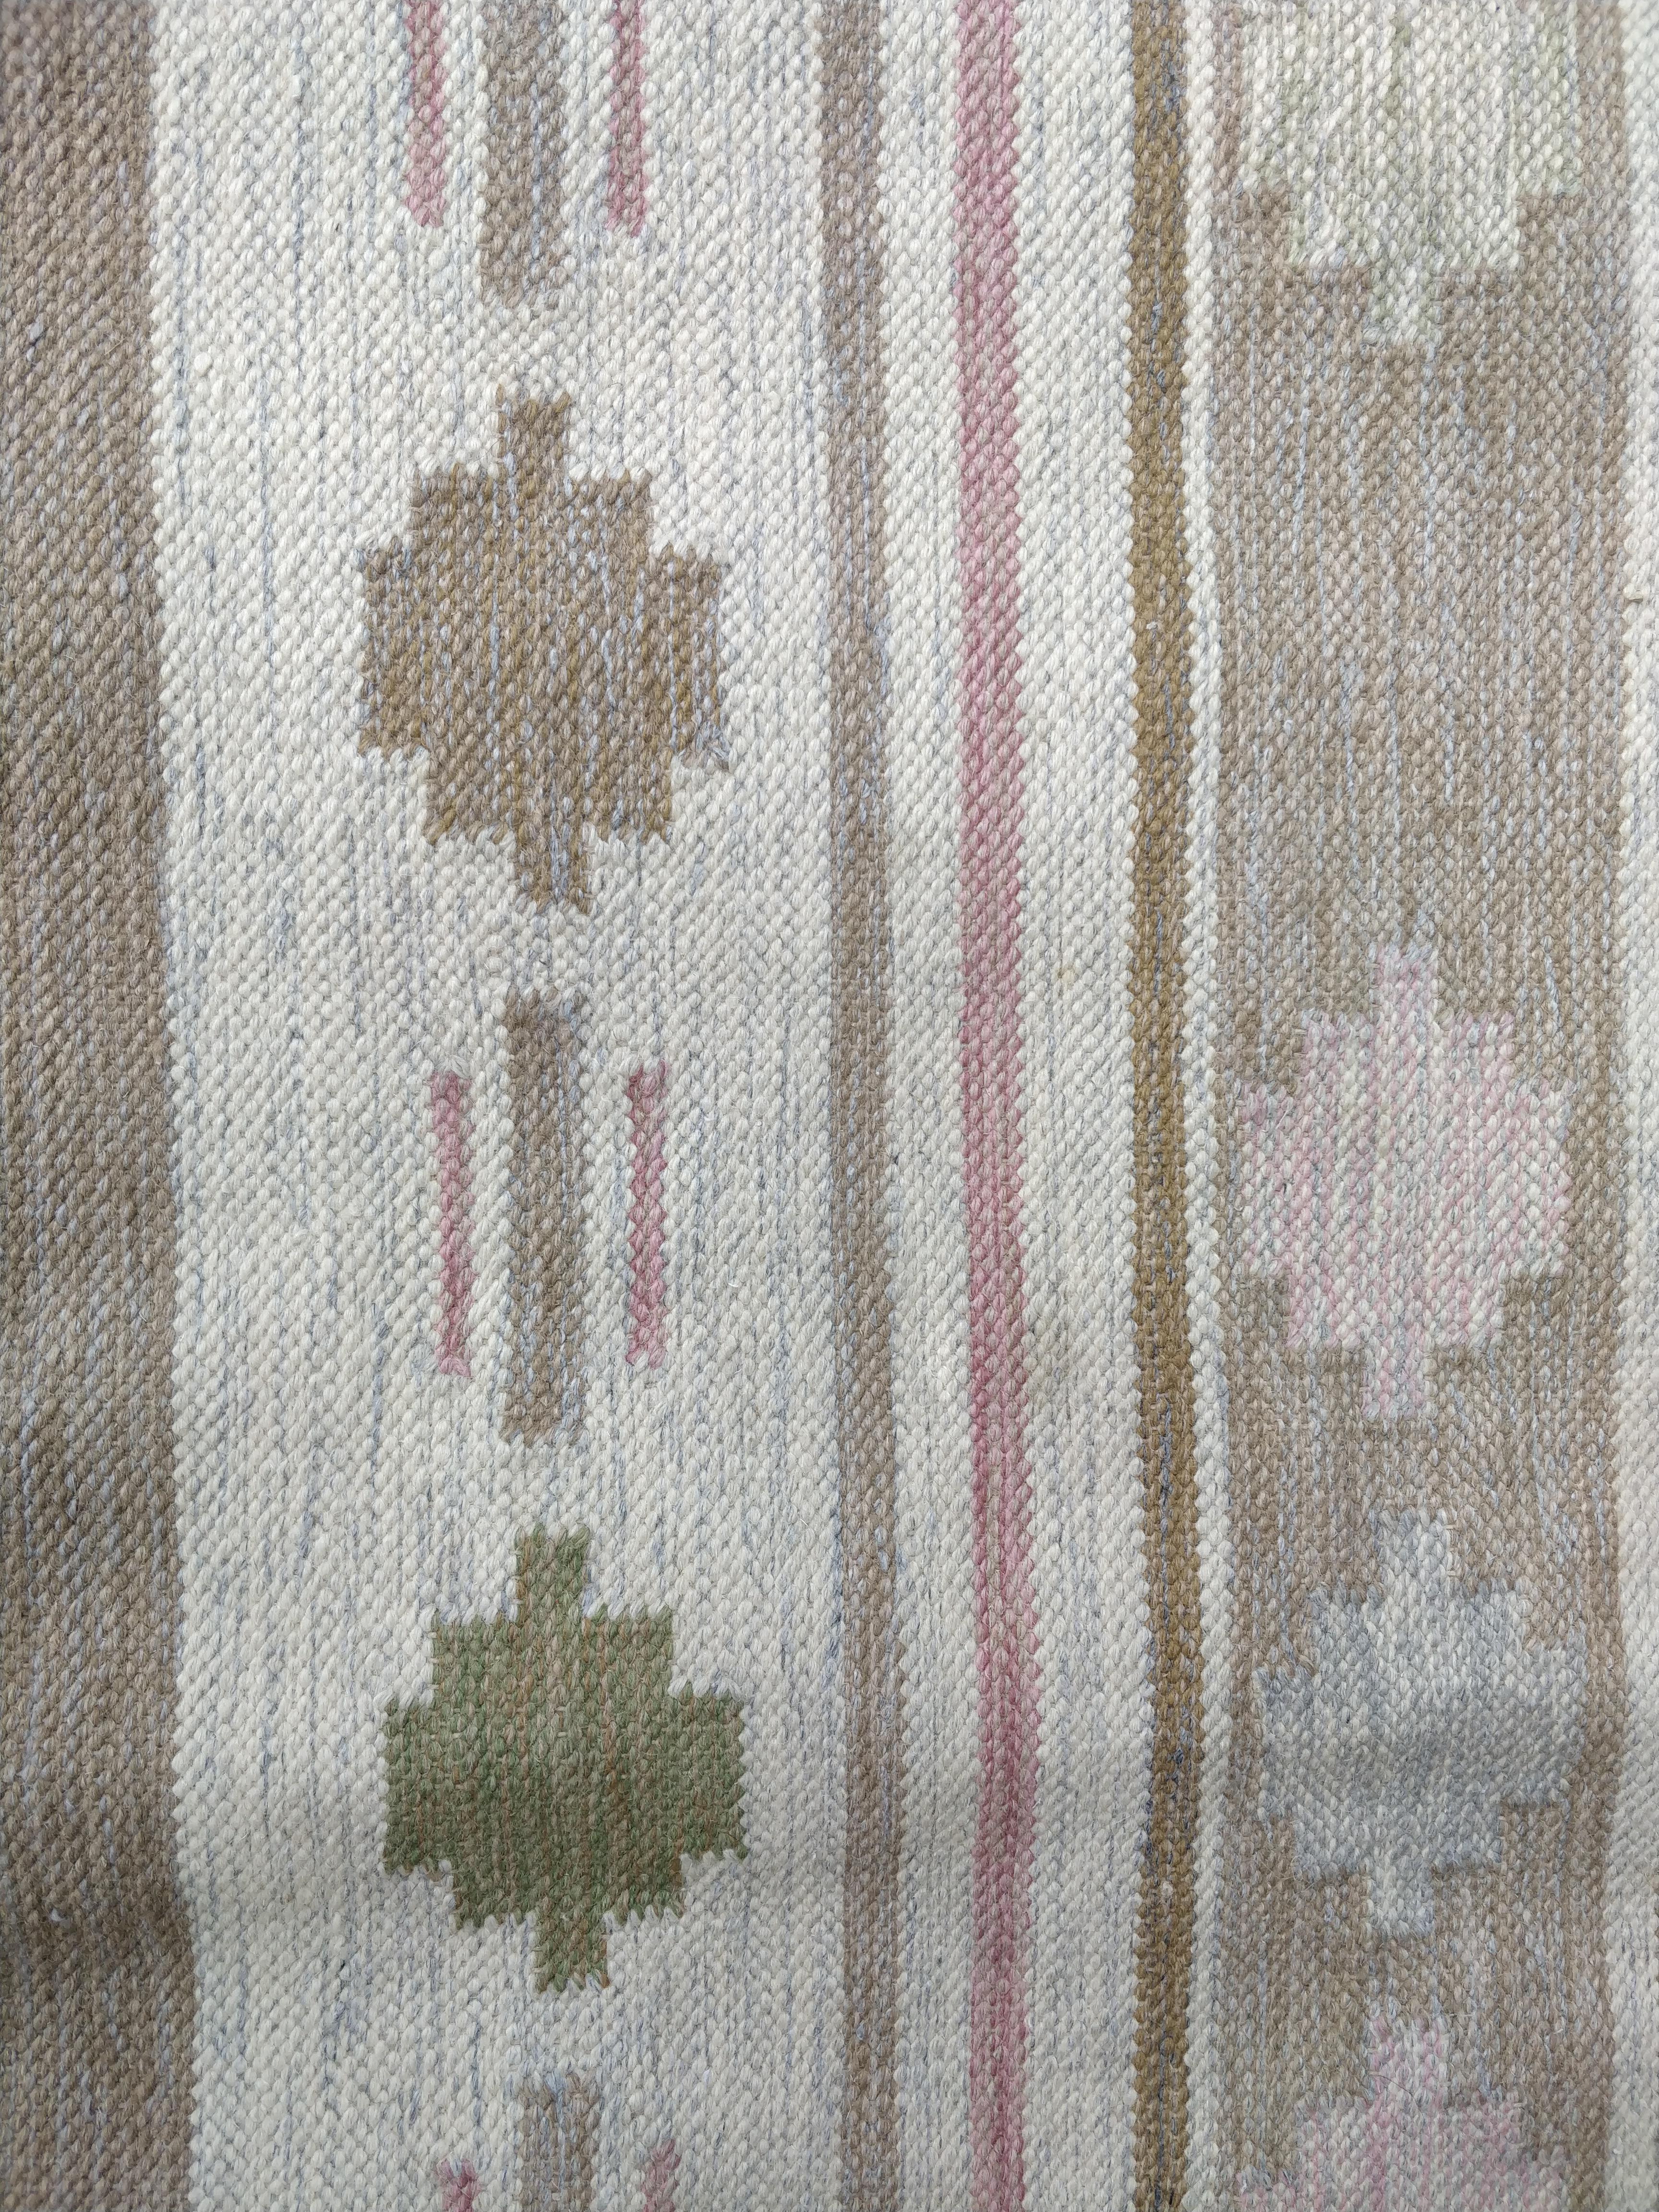  Flat-weave Kilim carpet by Swedish textile designer Anna Johanna Ångström   For Sale 2